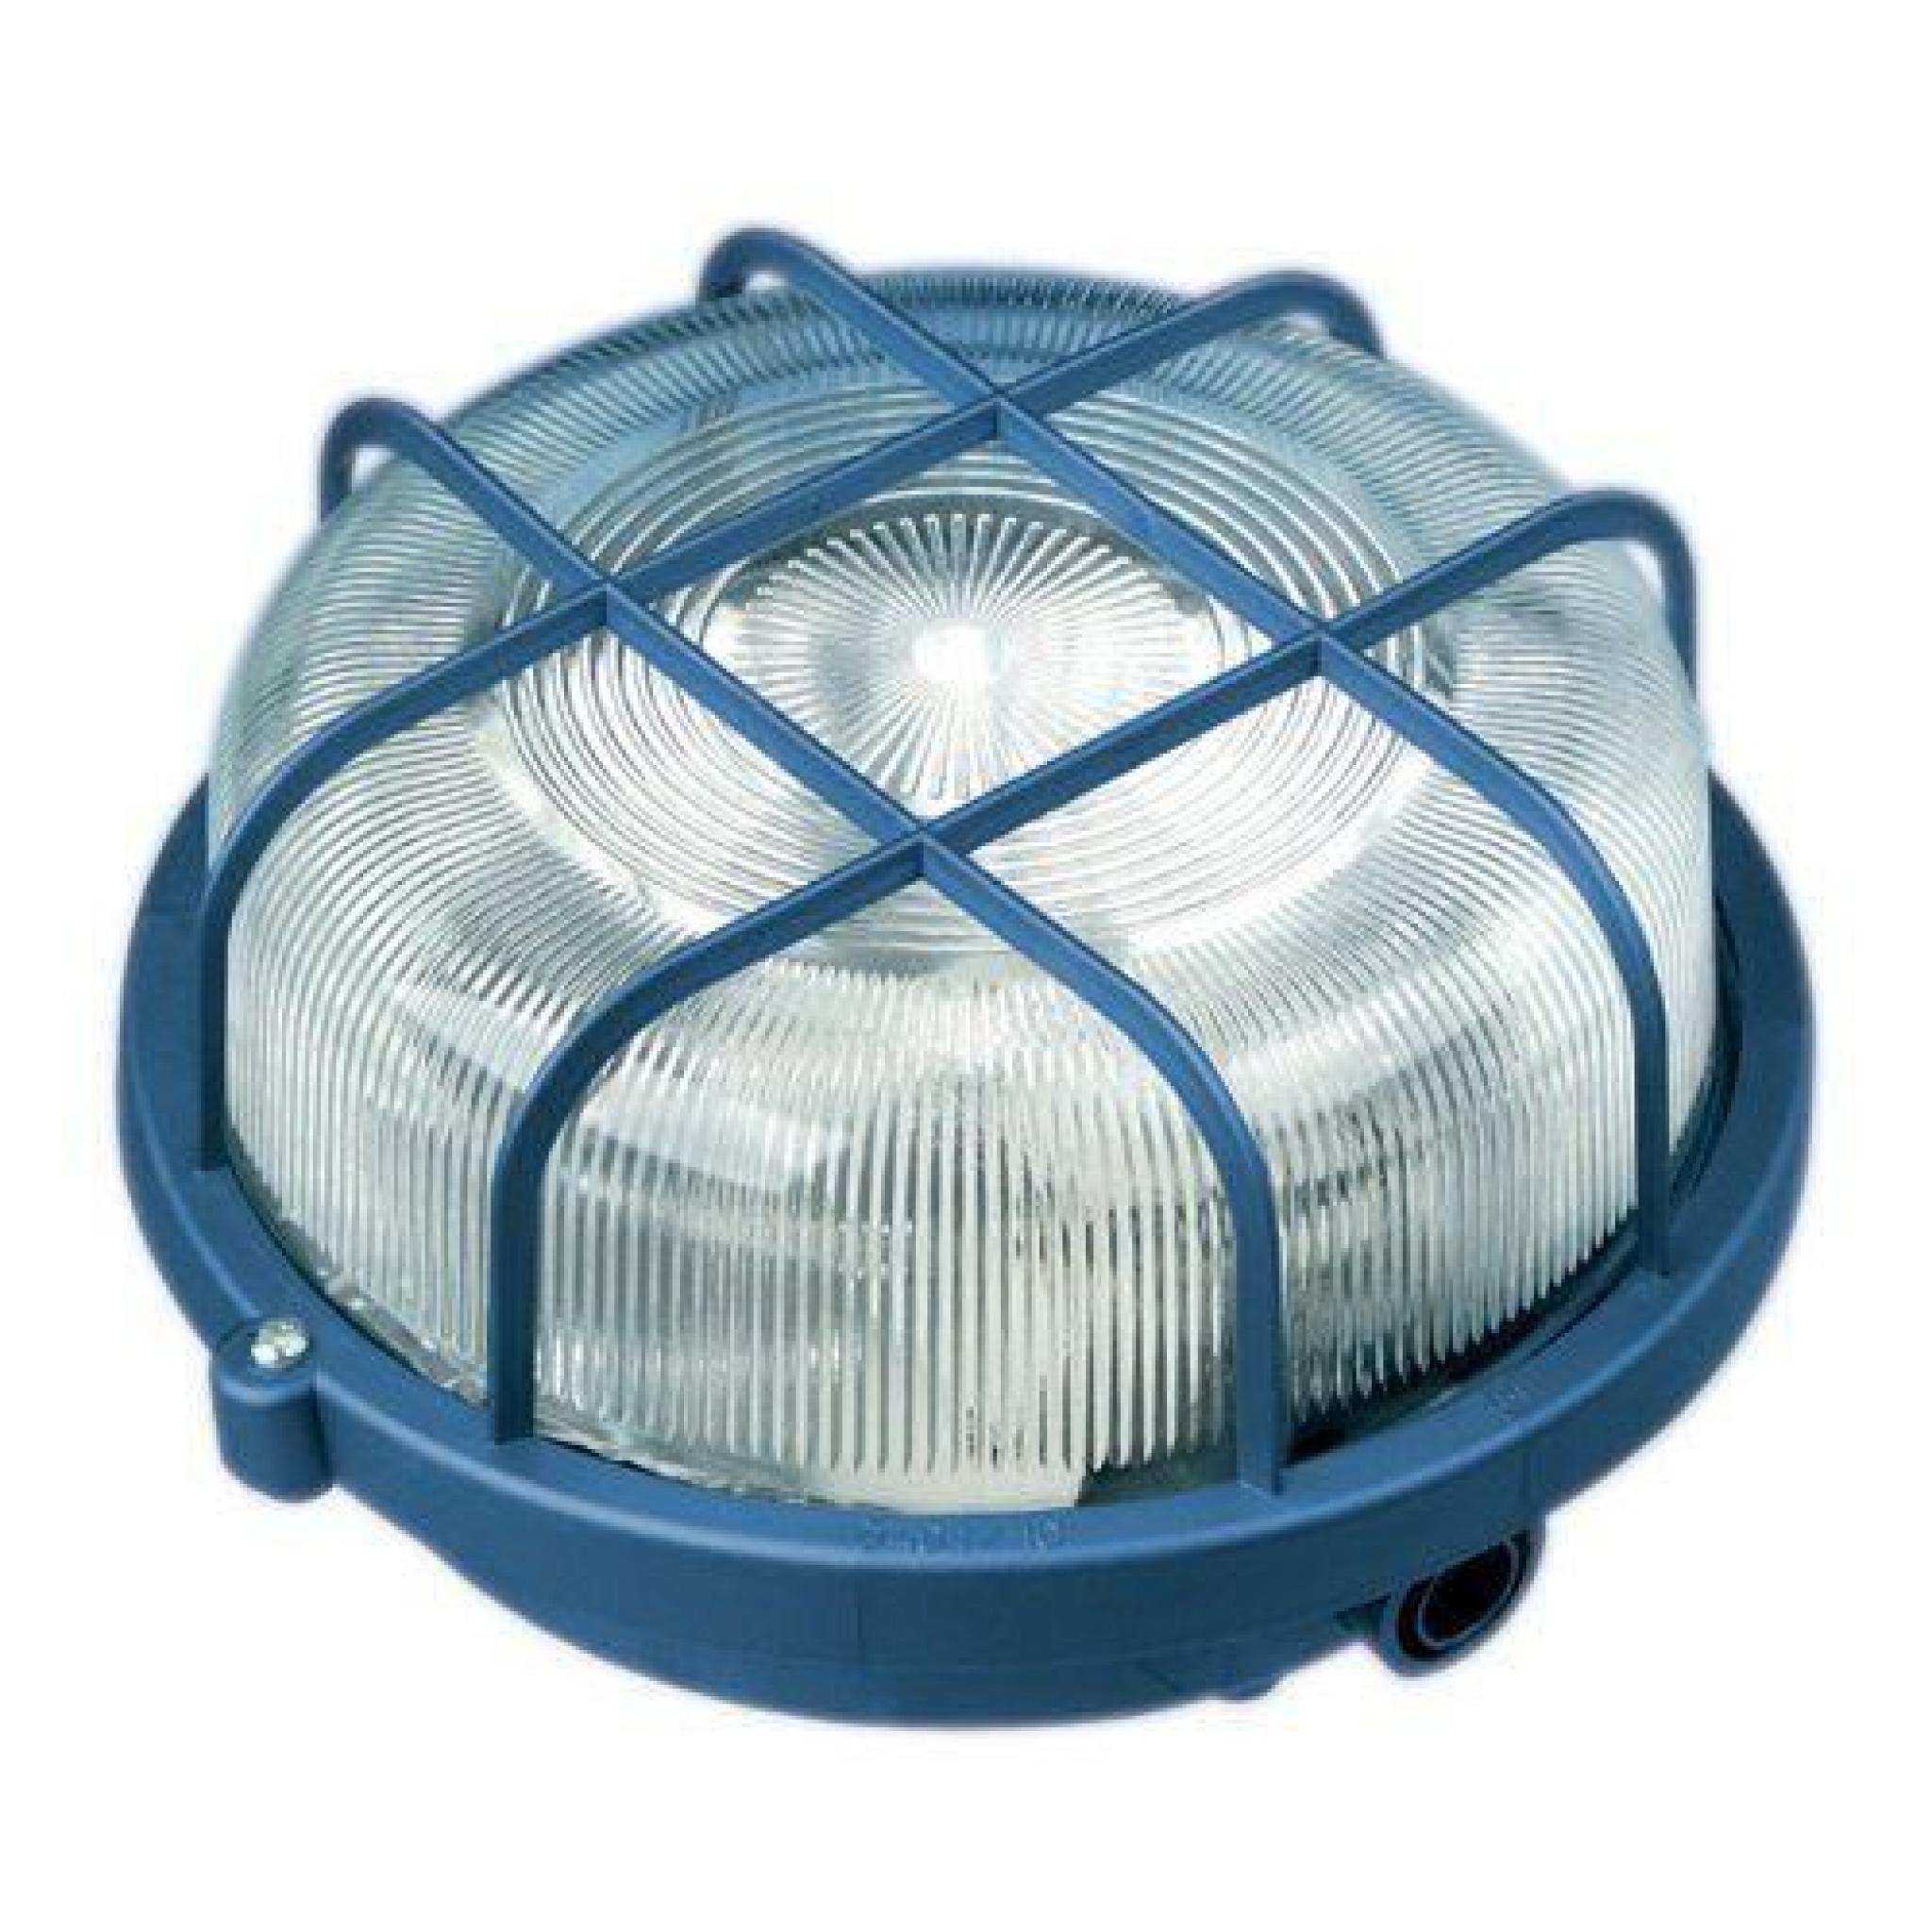 REV Ritter 0590097555 ISO Lampe ronde Bleu 100 W…